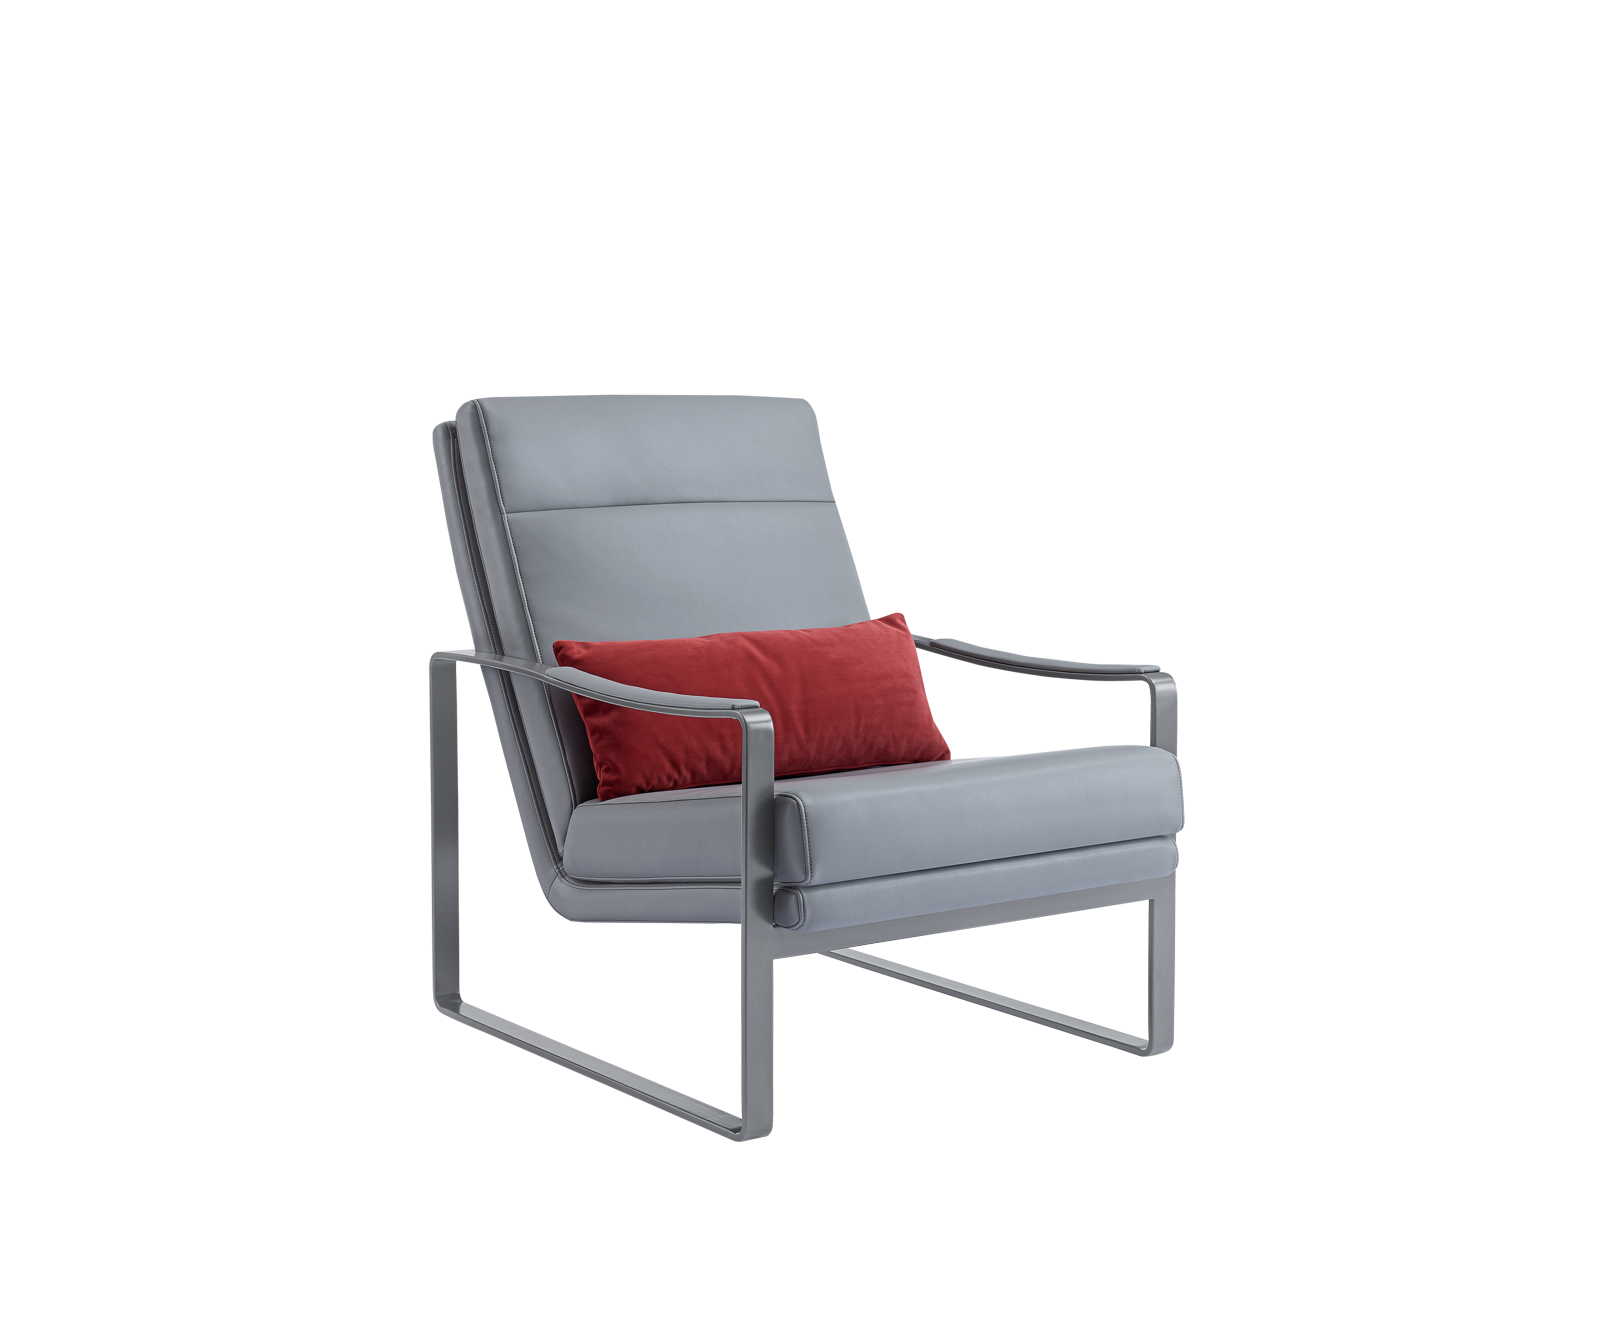 Leisure Chair Category | Armchair Swivel Chair Rocking Chair